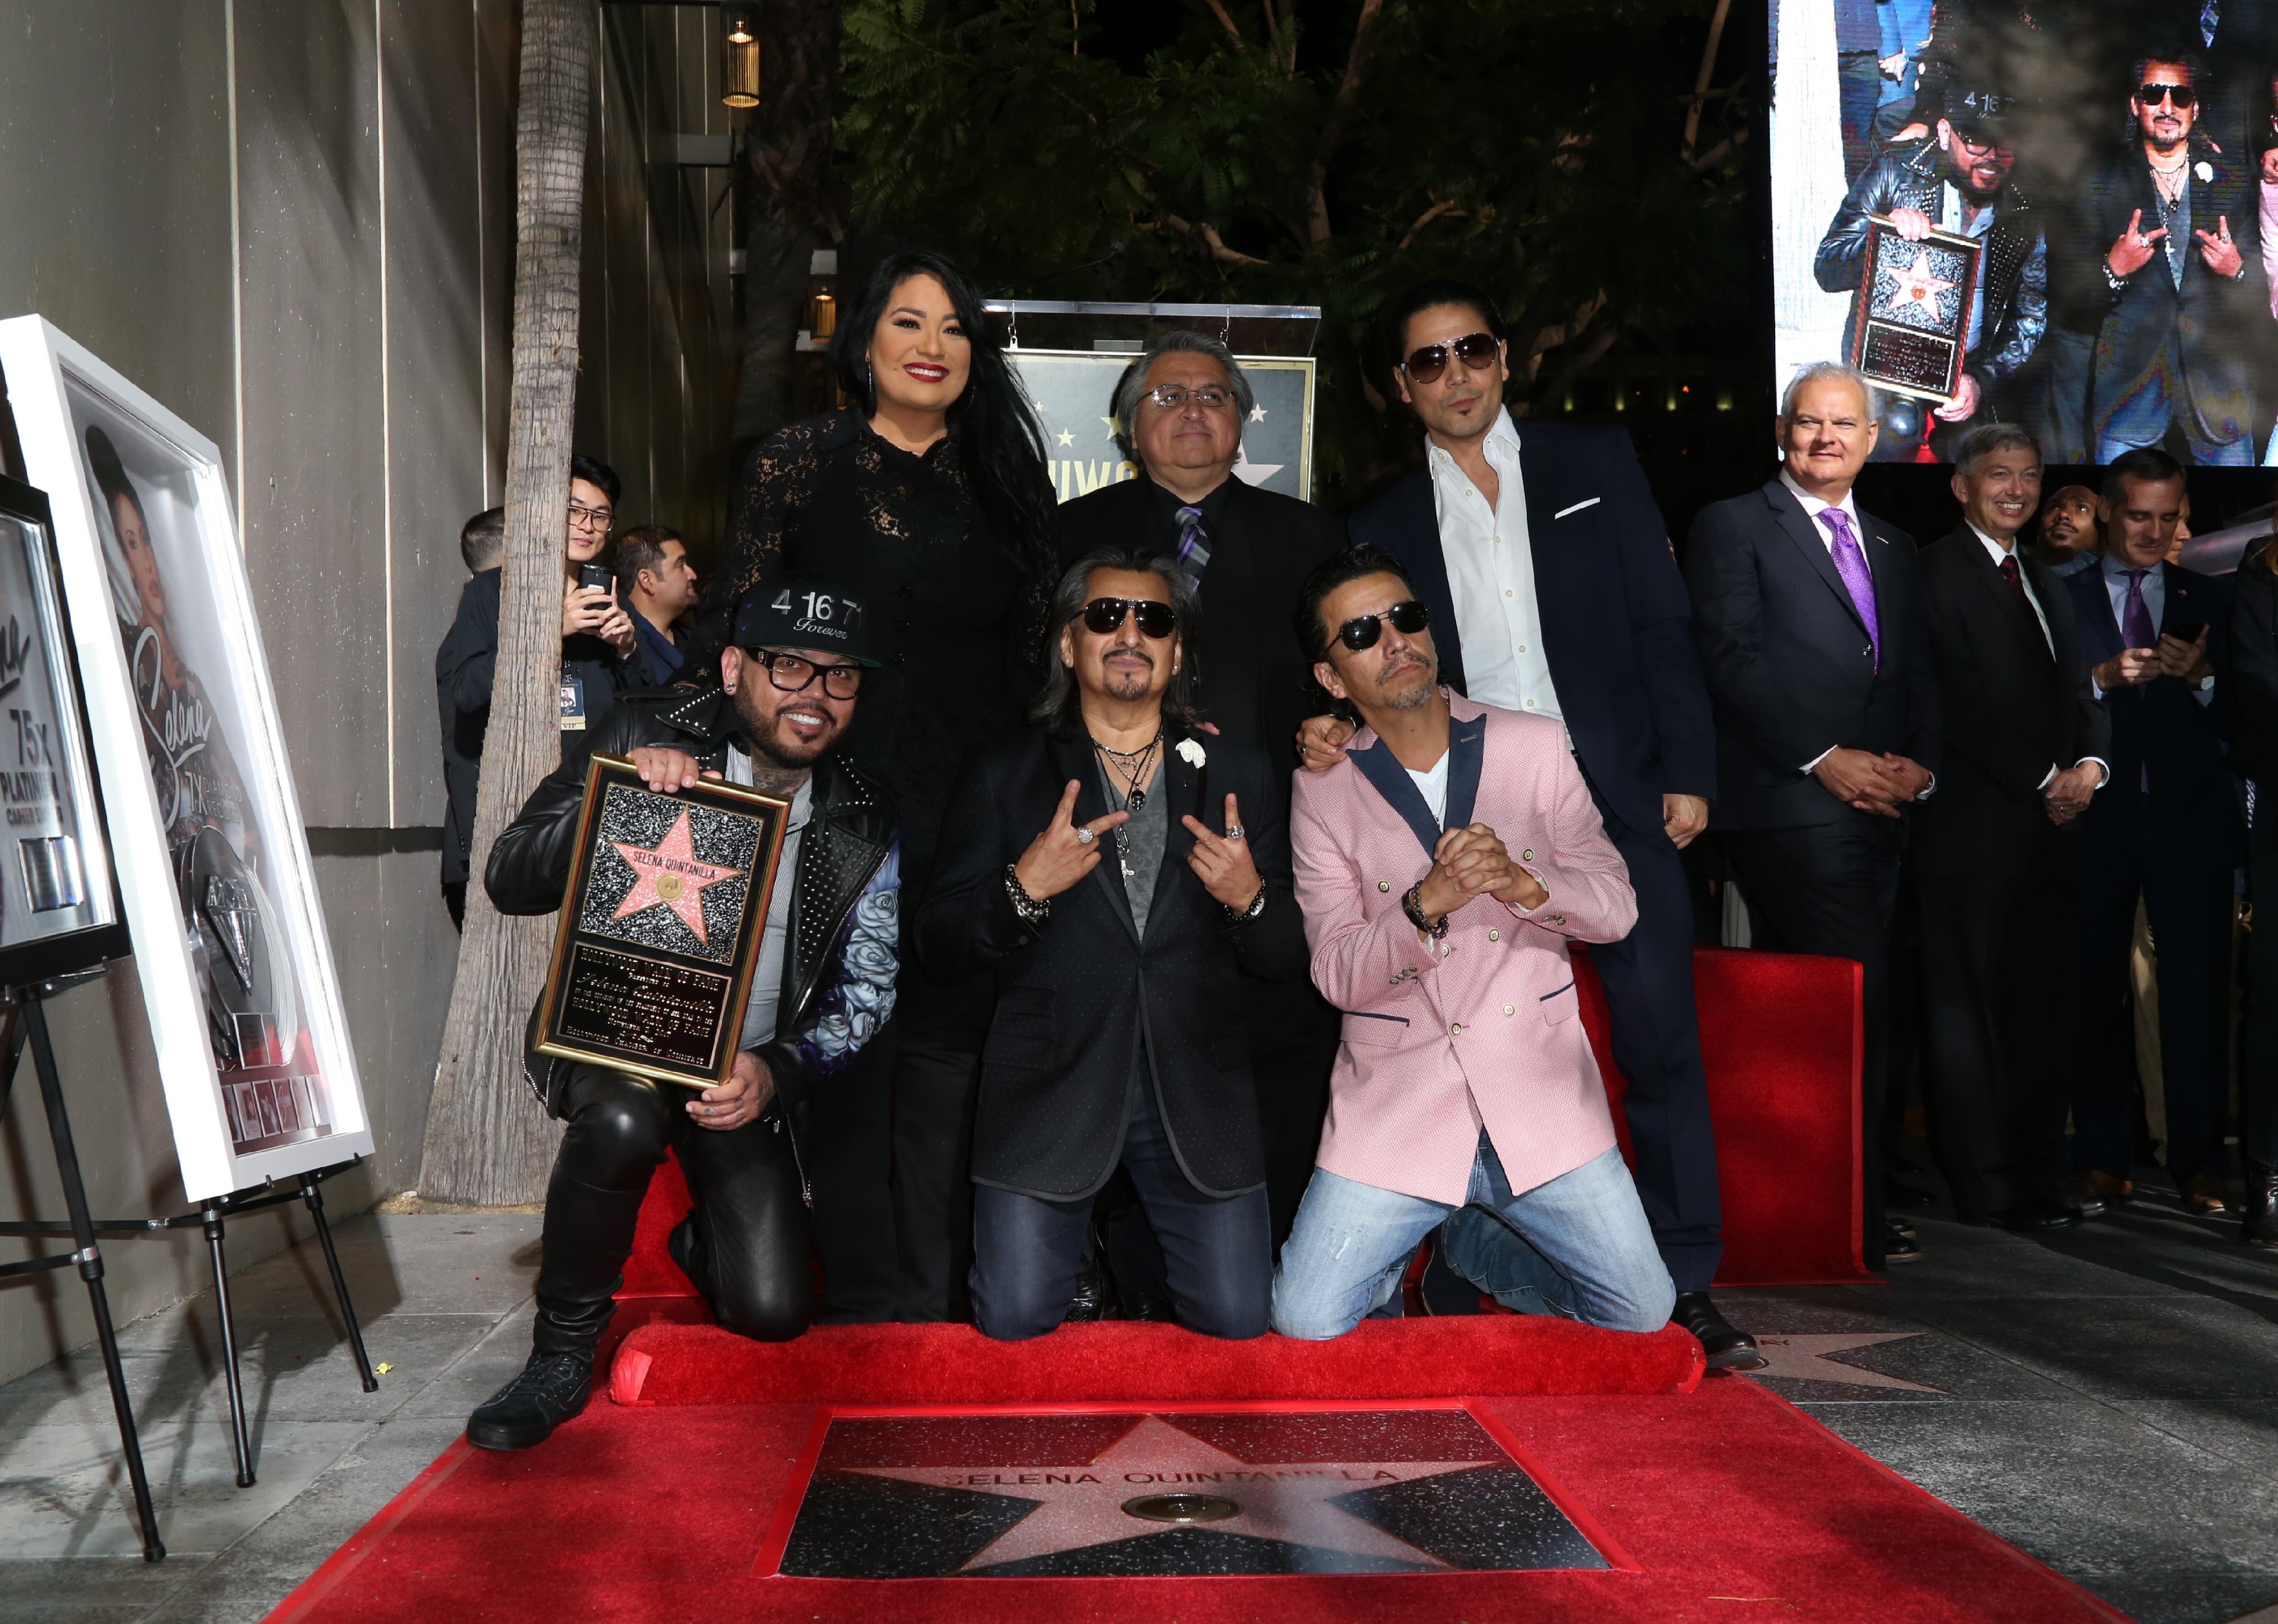 A.B. Quintanilla, Suzette Quintanilla, Pete Astudillo, Chris Perez and other members of 'Selena y Los Dinos'.